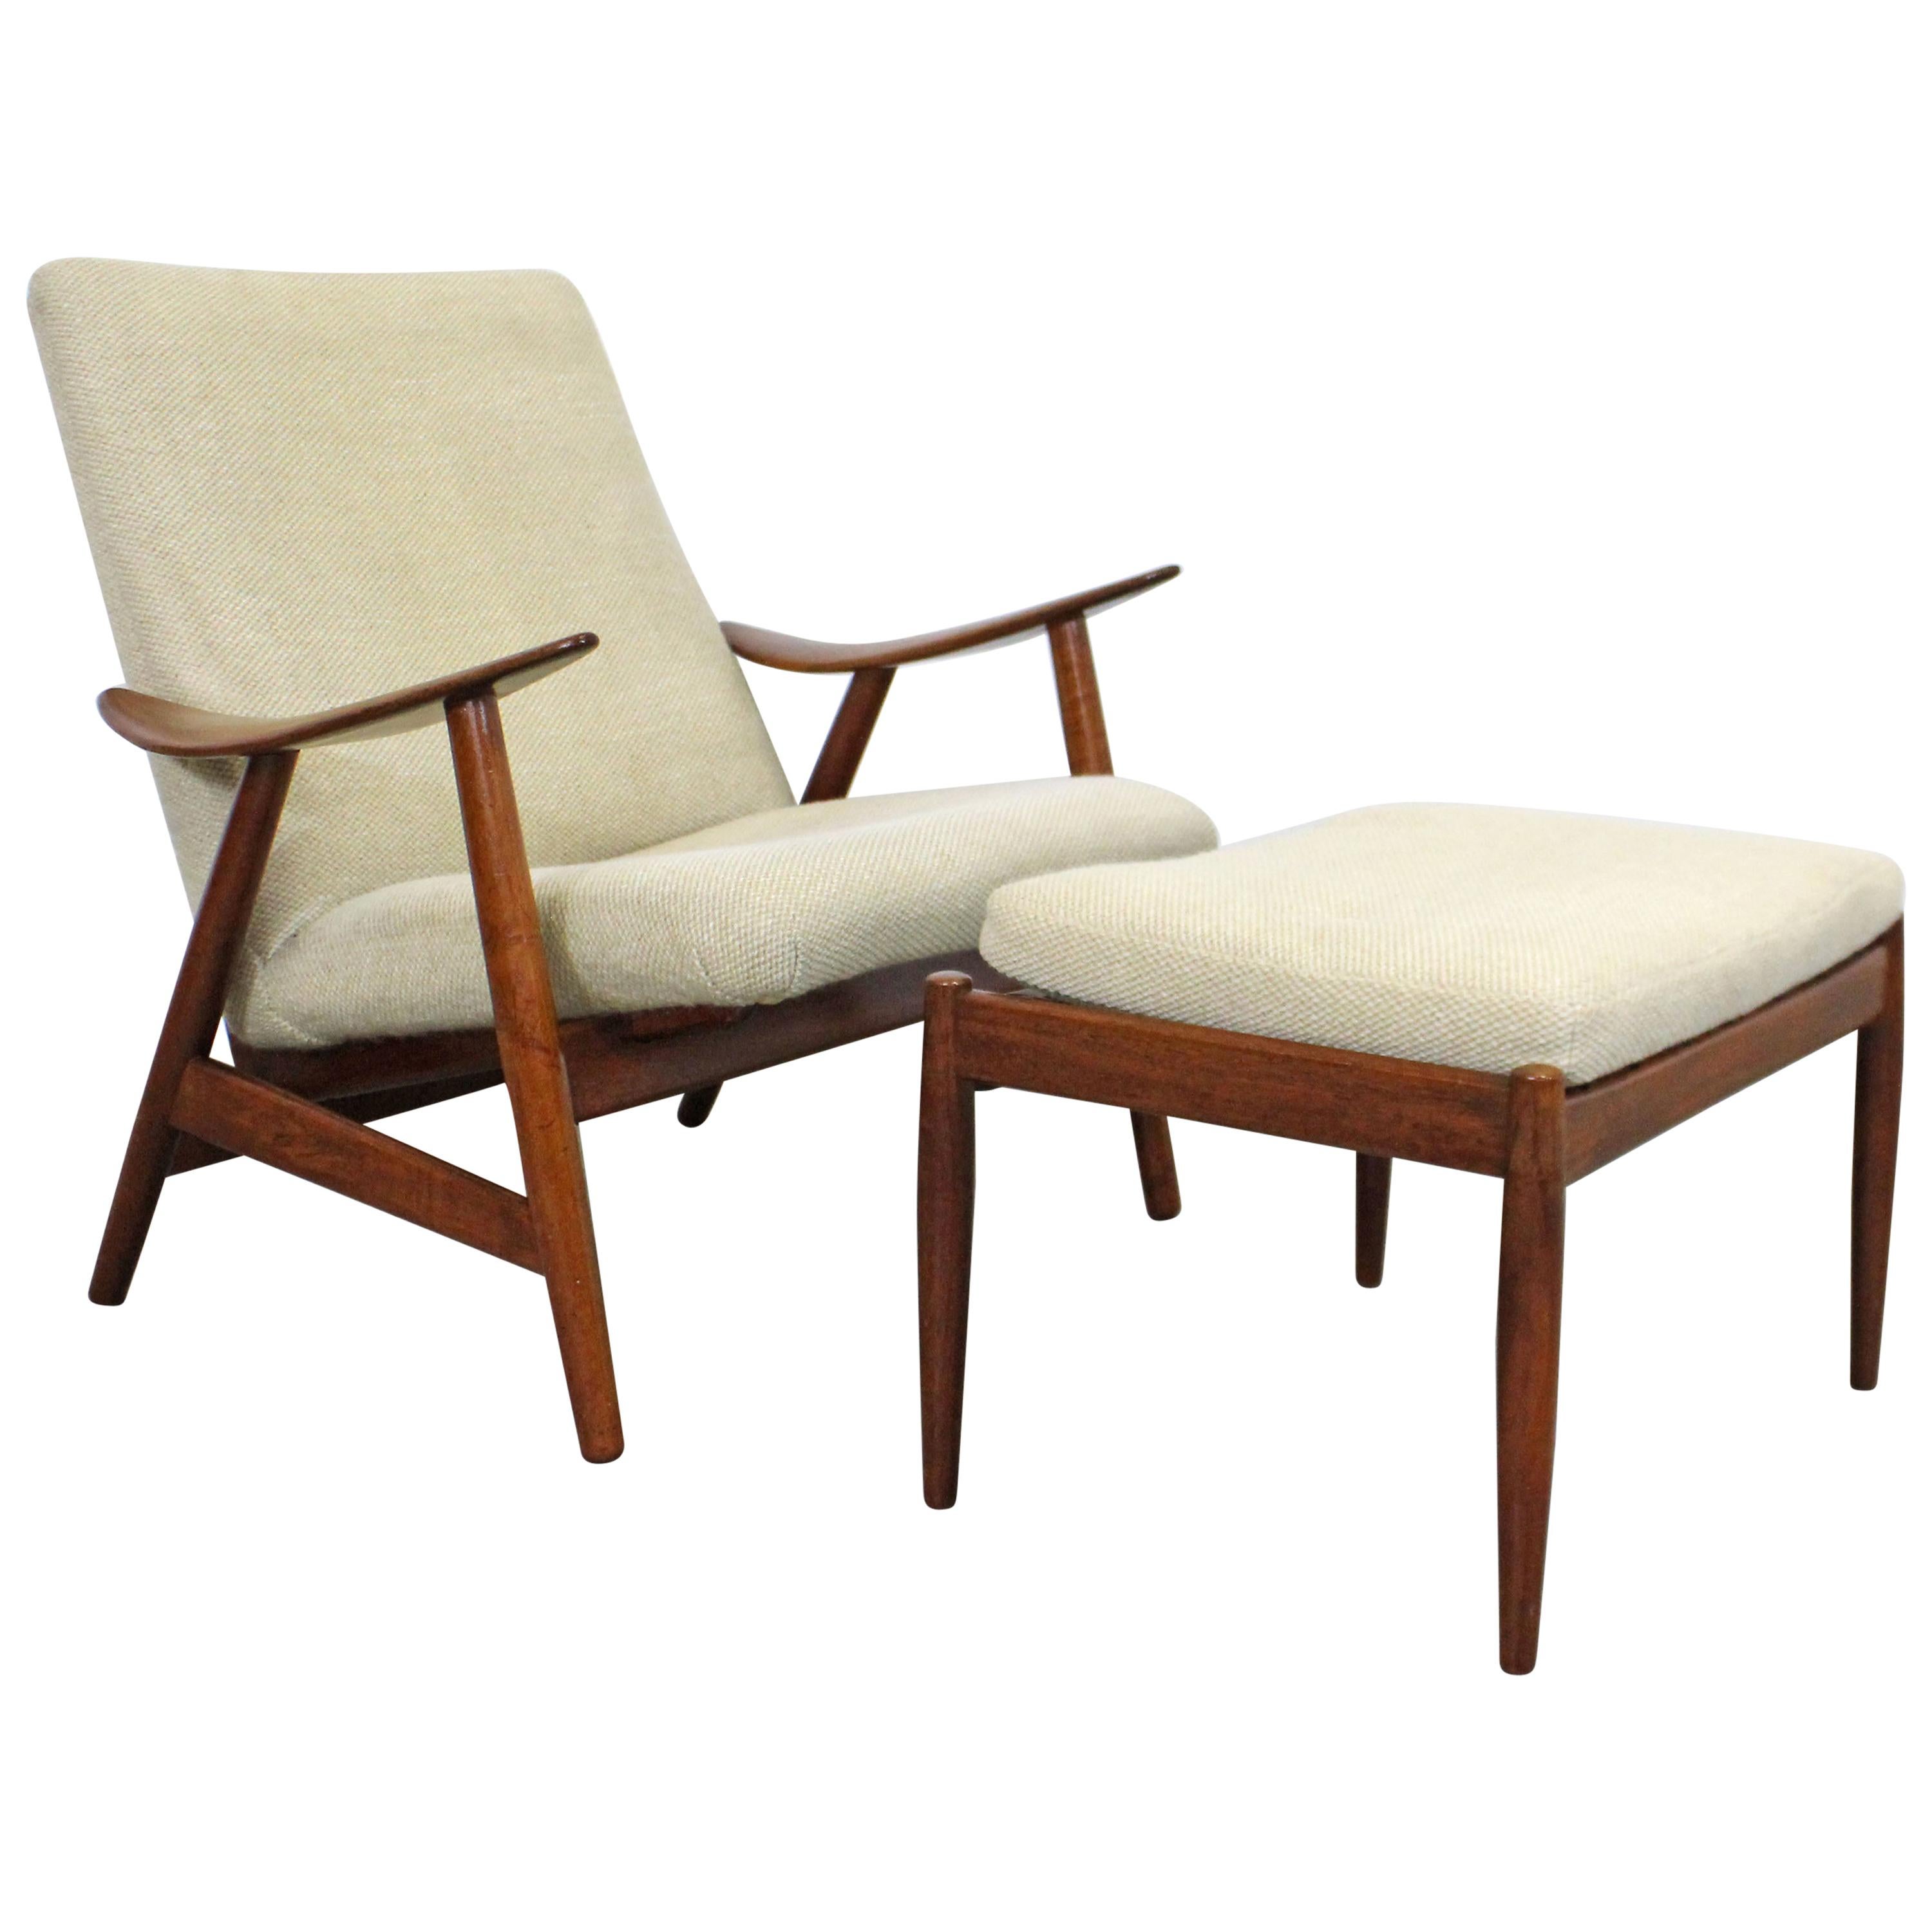 Midcentury Danish Modern Teak Lounge Chair and Ottoman